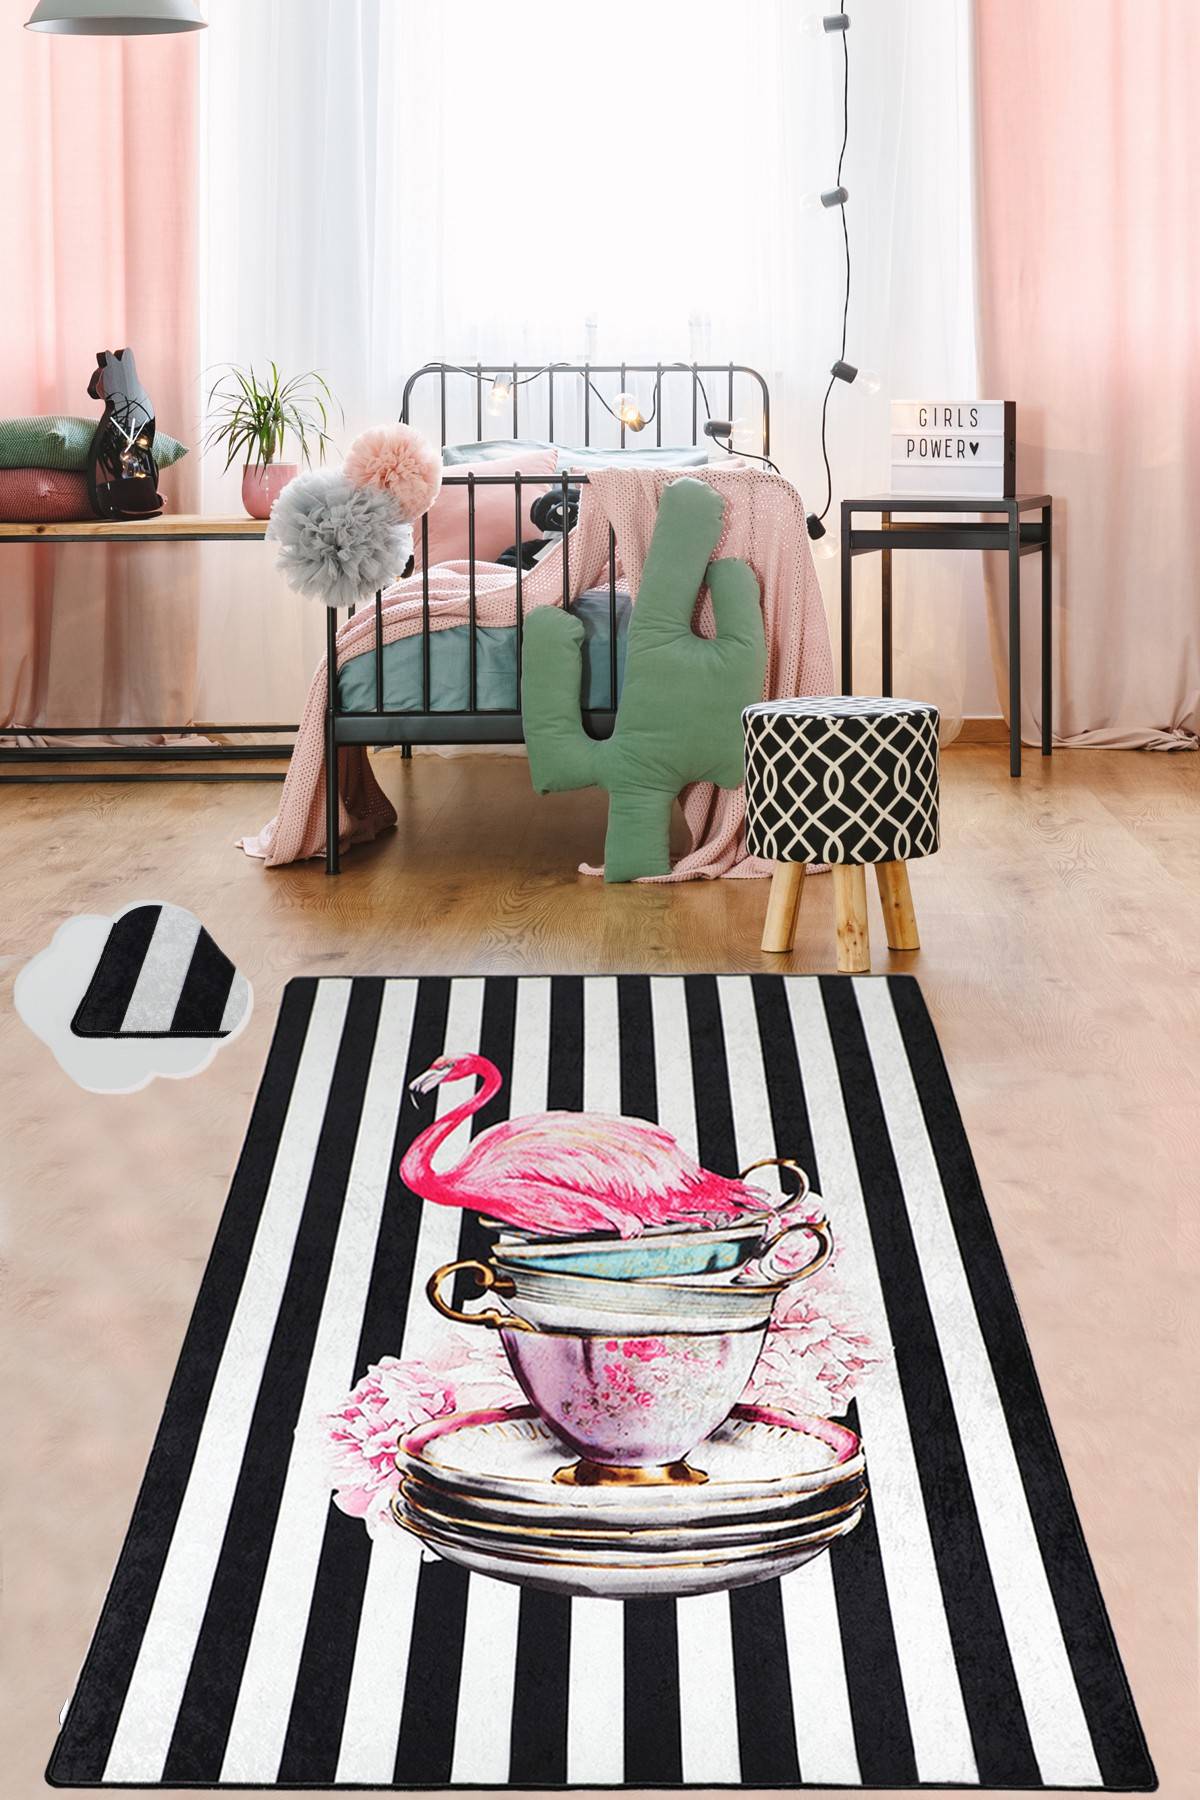 Talal tapijt 200x290cm Fluweel Zwart-wit streeppatroon en roze flamingo sublimatie cup design